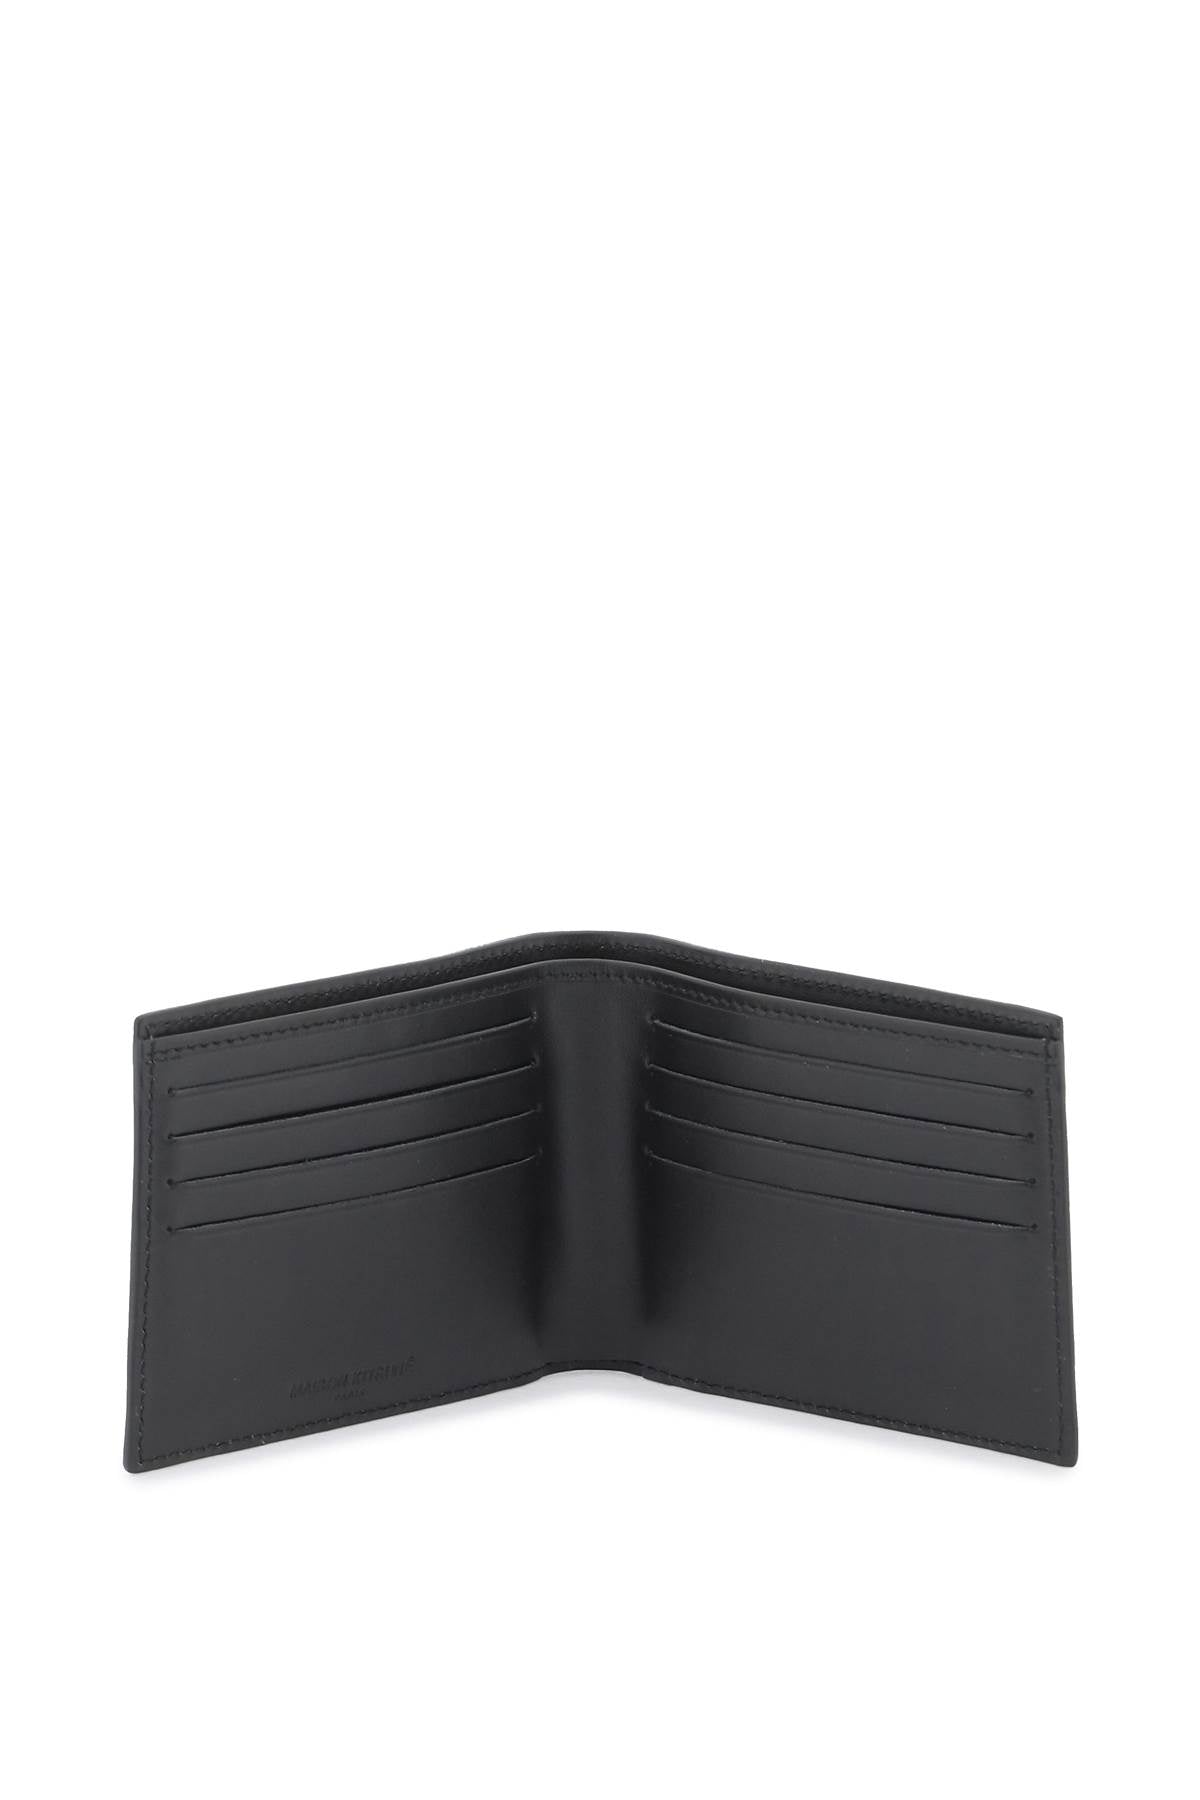 Maison Kitsune Fox Head Bi Fold Wallet   Black